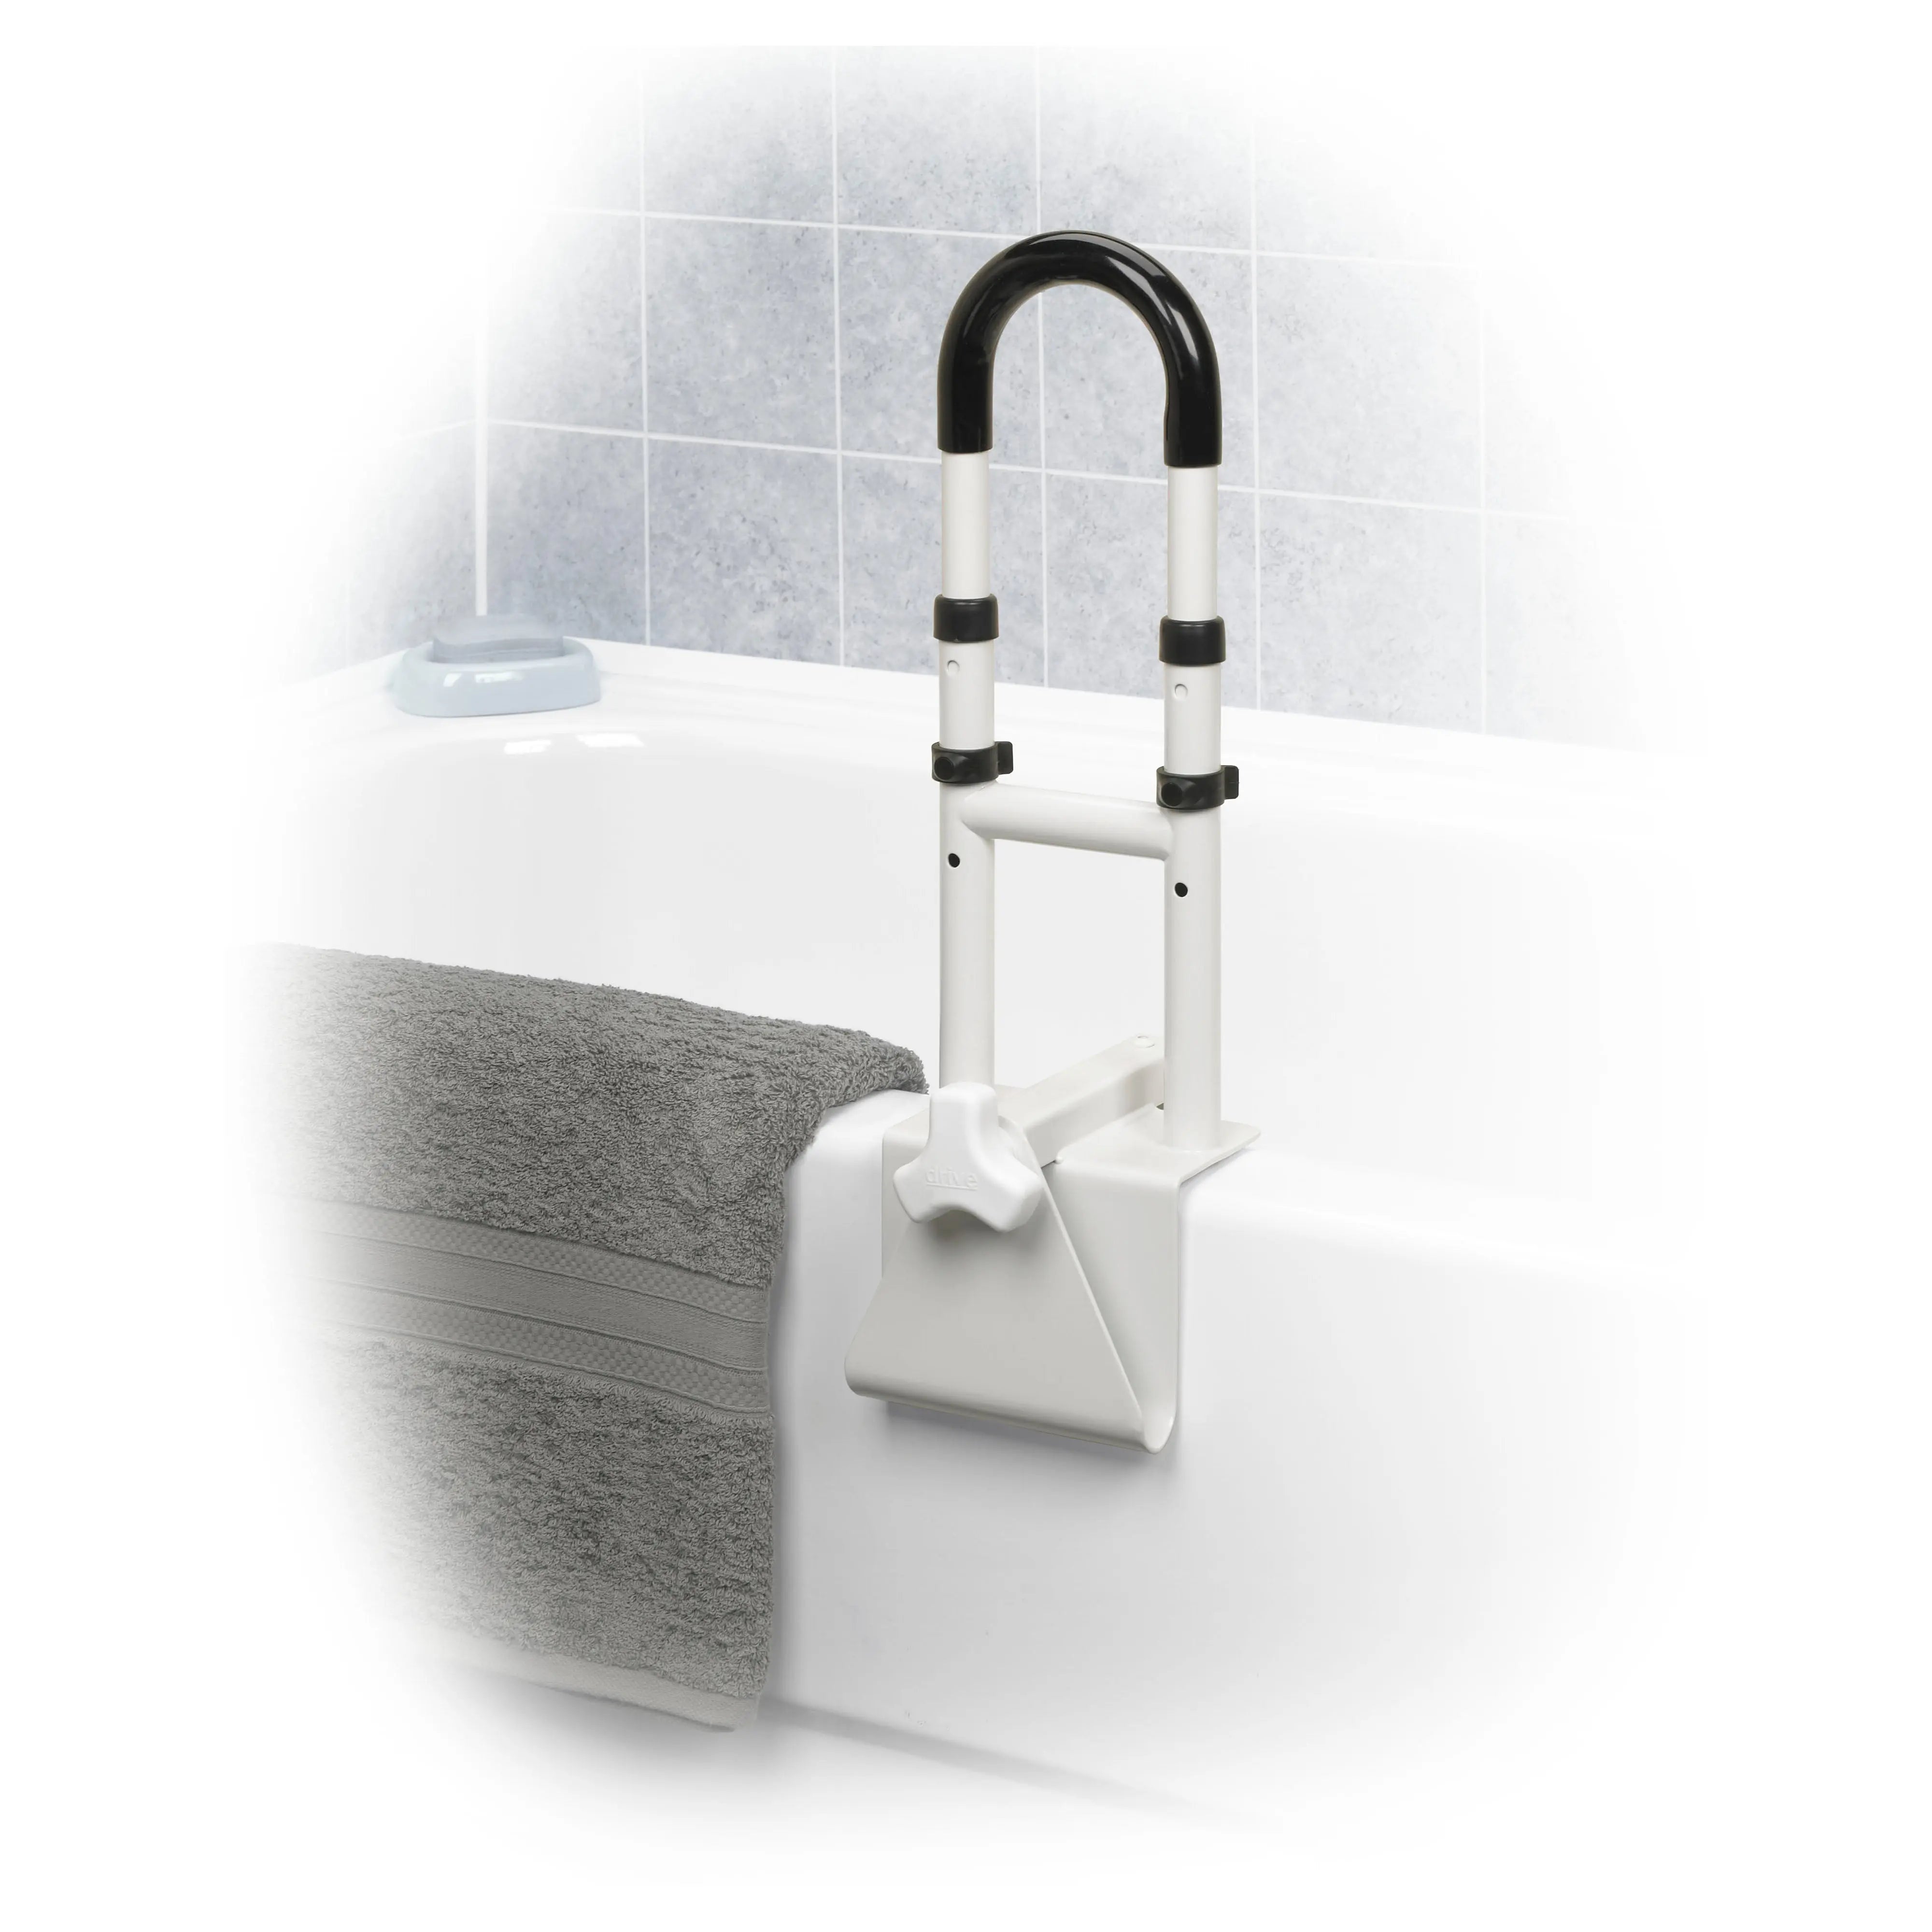 Adjustable Height Bathtub Grab Bar Safety Rail - Home Health Store Inc